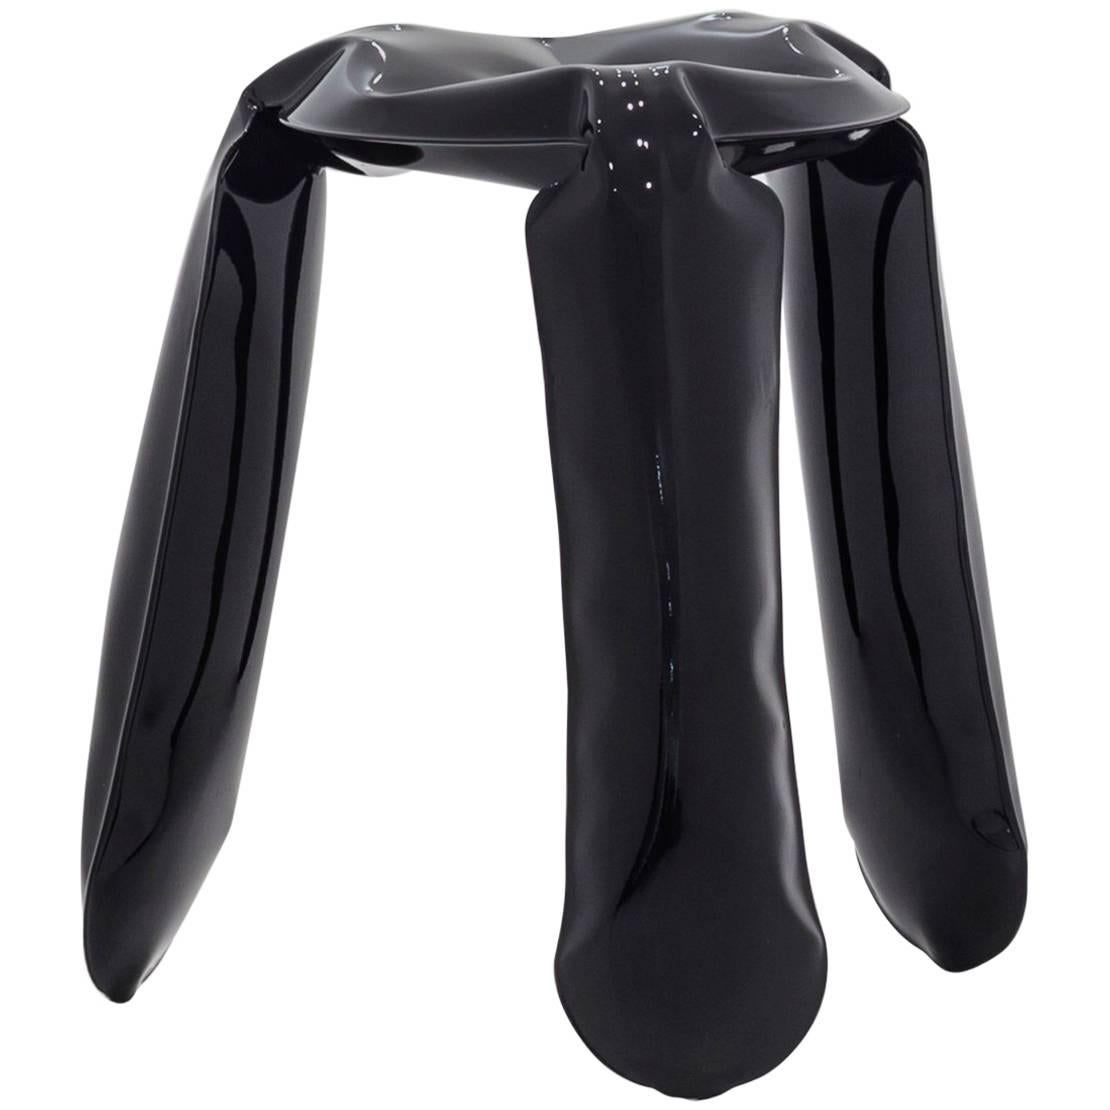 "Plopp" Stool, Standard Size, Black Version For Sale